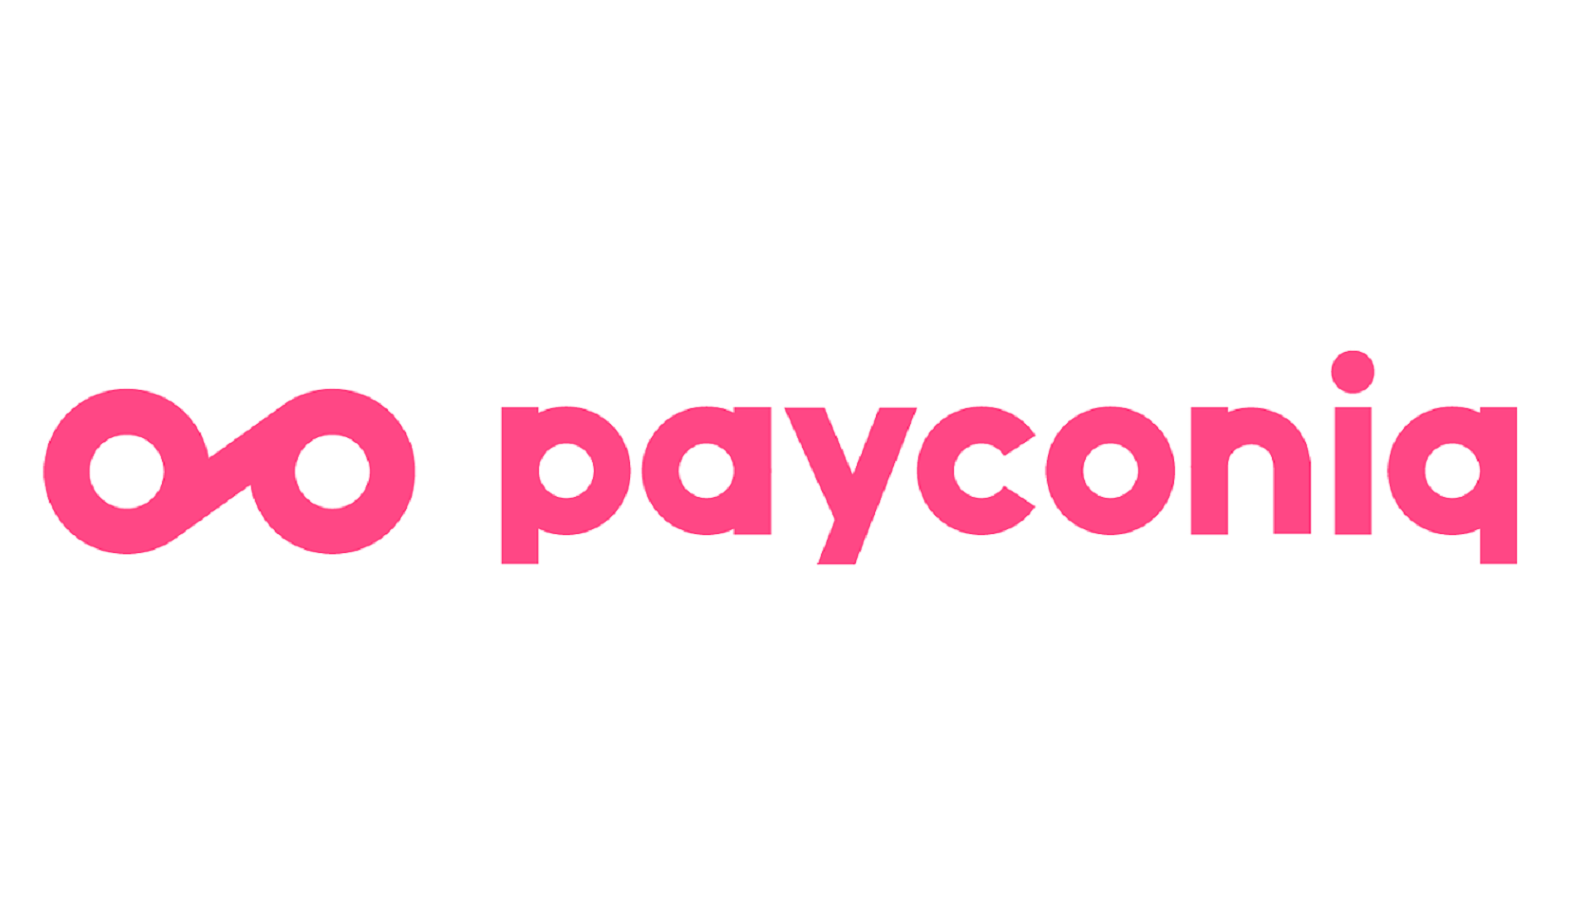 Deposit money on Starcasinosport.be with Payconiq